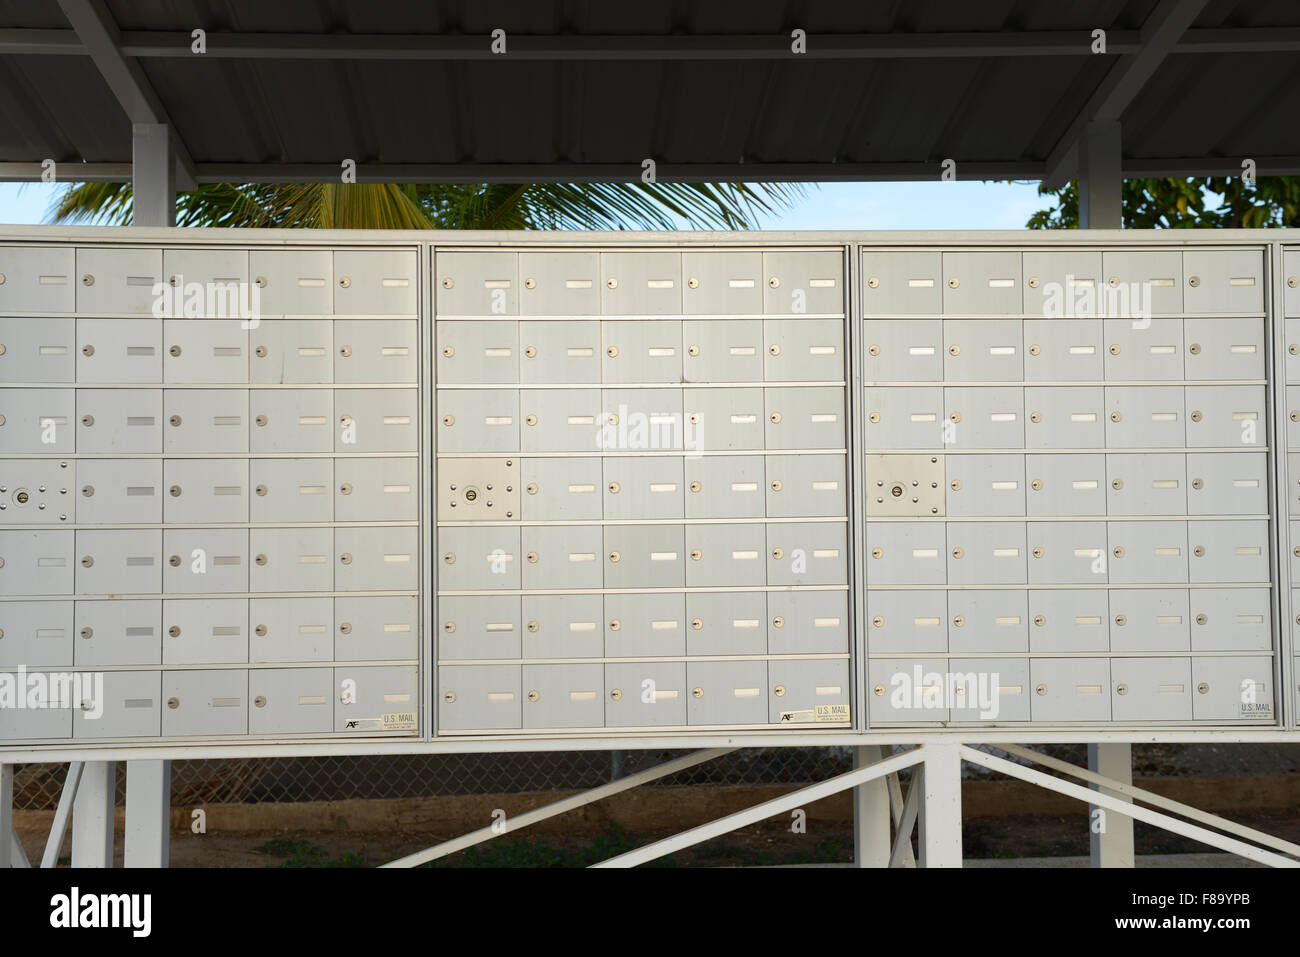 Buzones de correo residencial fotografías e imágenes de alta resolución -  Alamy